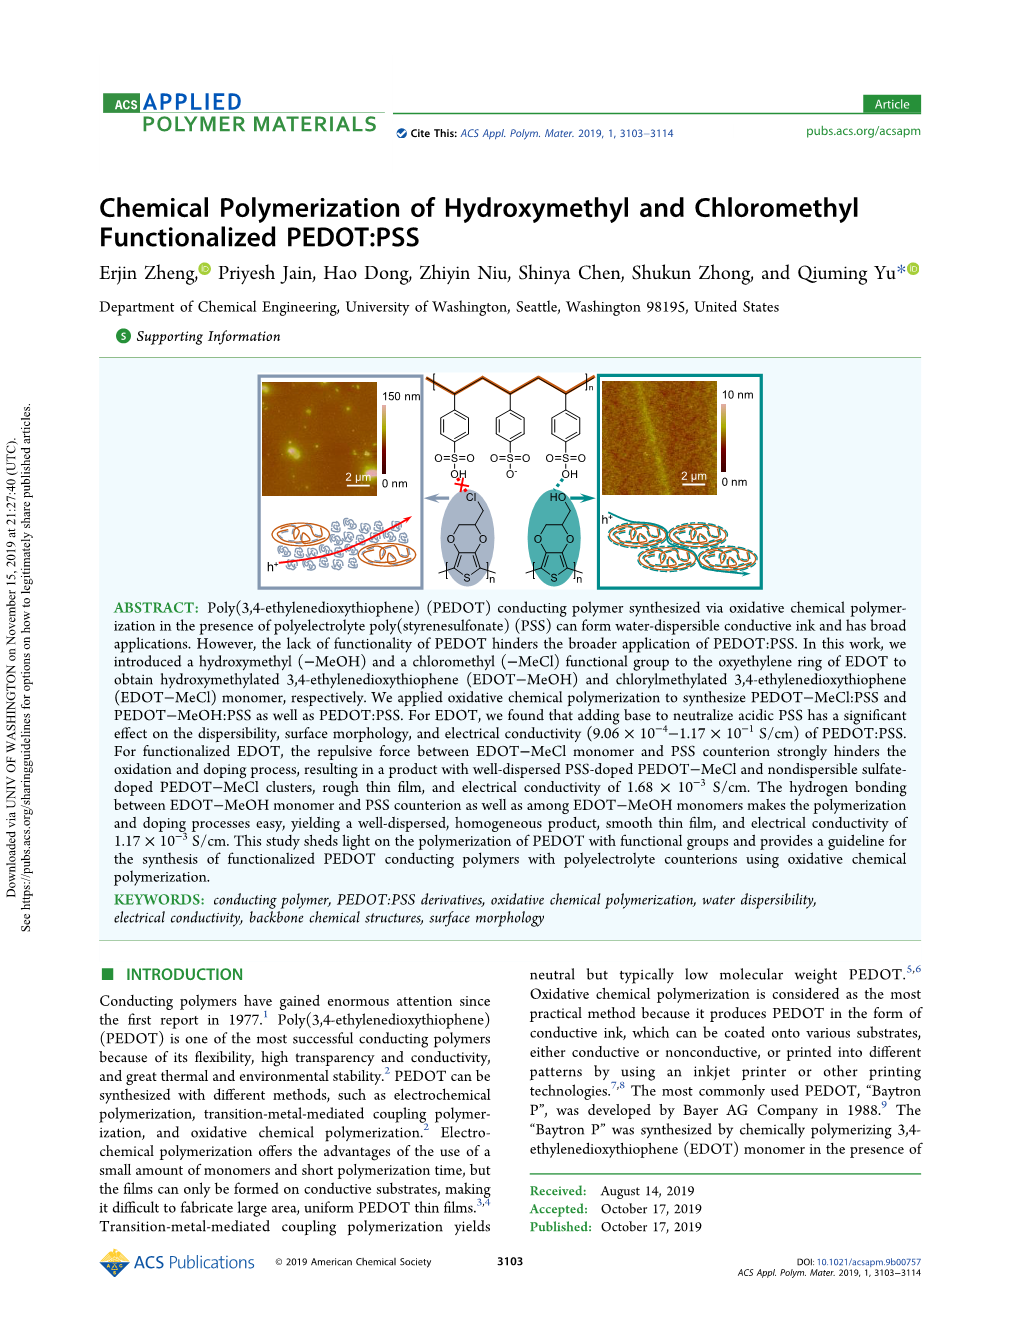 Chemical Polymerization of Hydroxymethyl and Chloromethyl Functionalized PEDOT:PSS